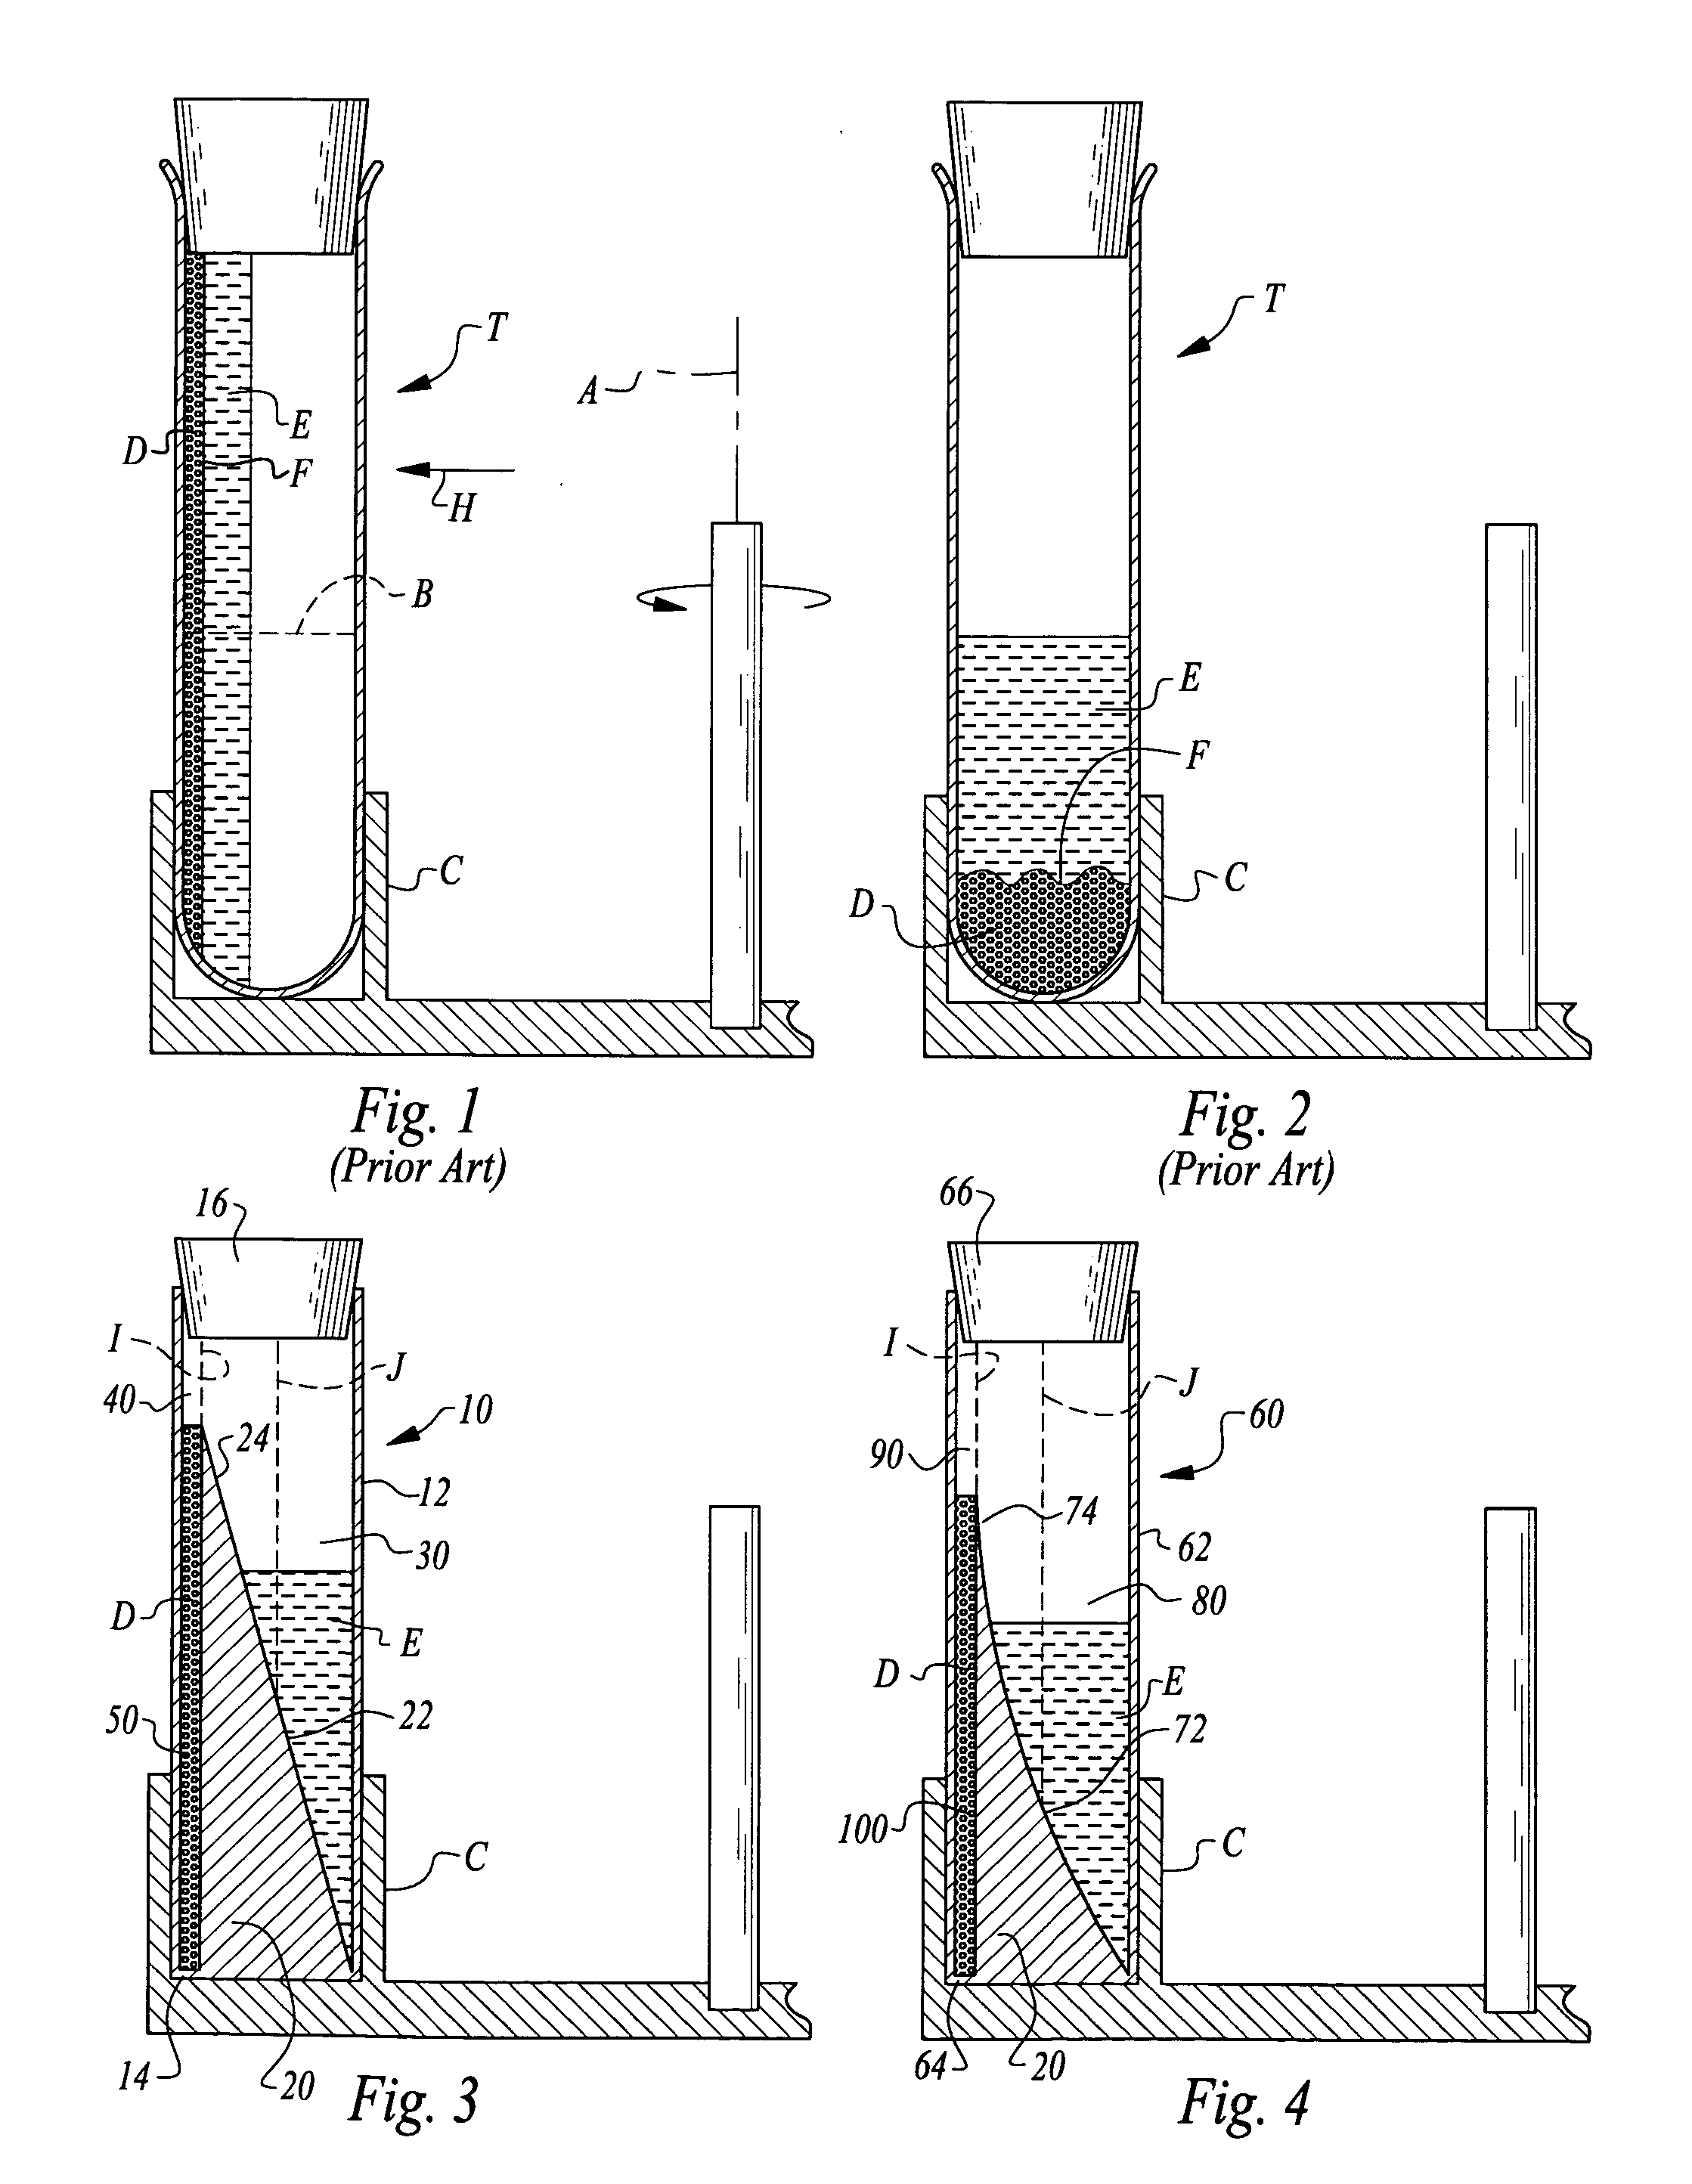 Centrifuge separation method and apparatus using a medium density fluid